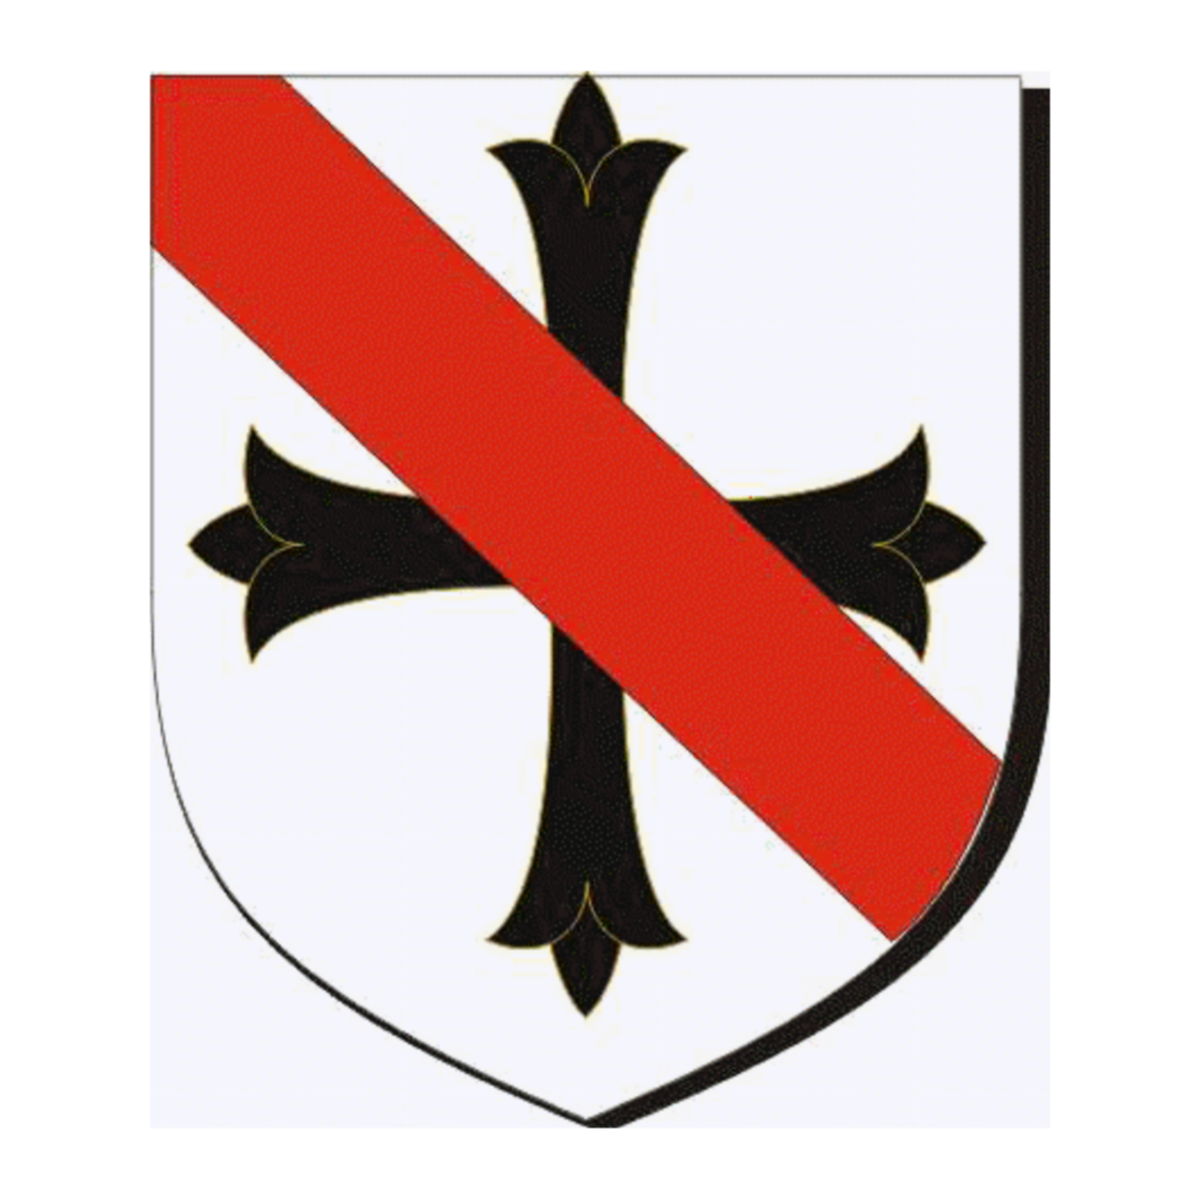 Wappen der FamilieNelson